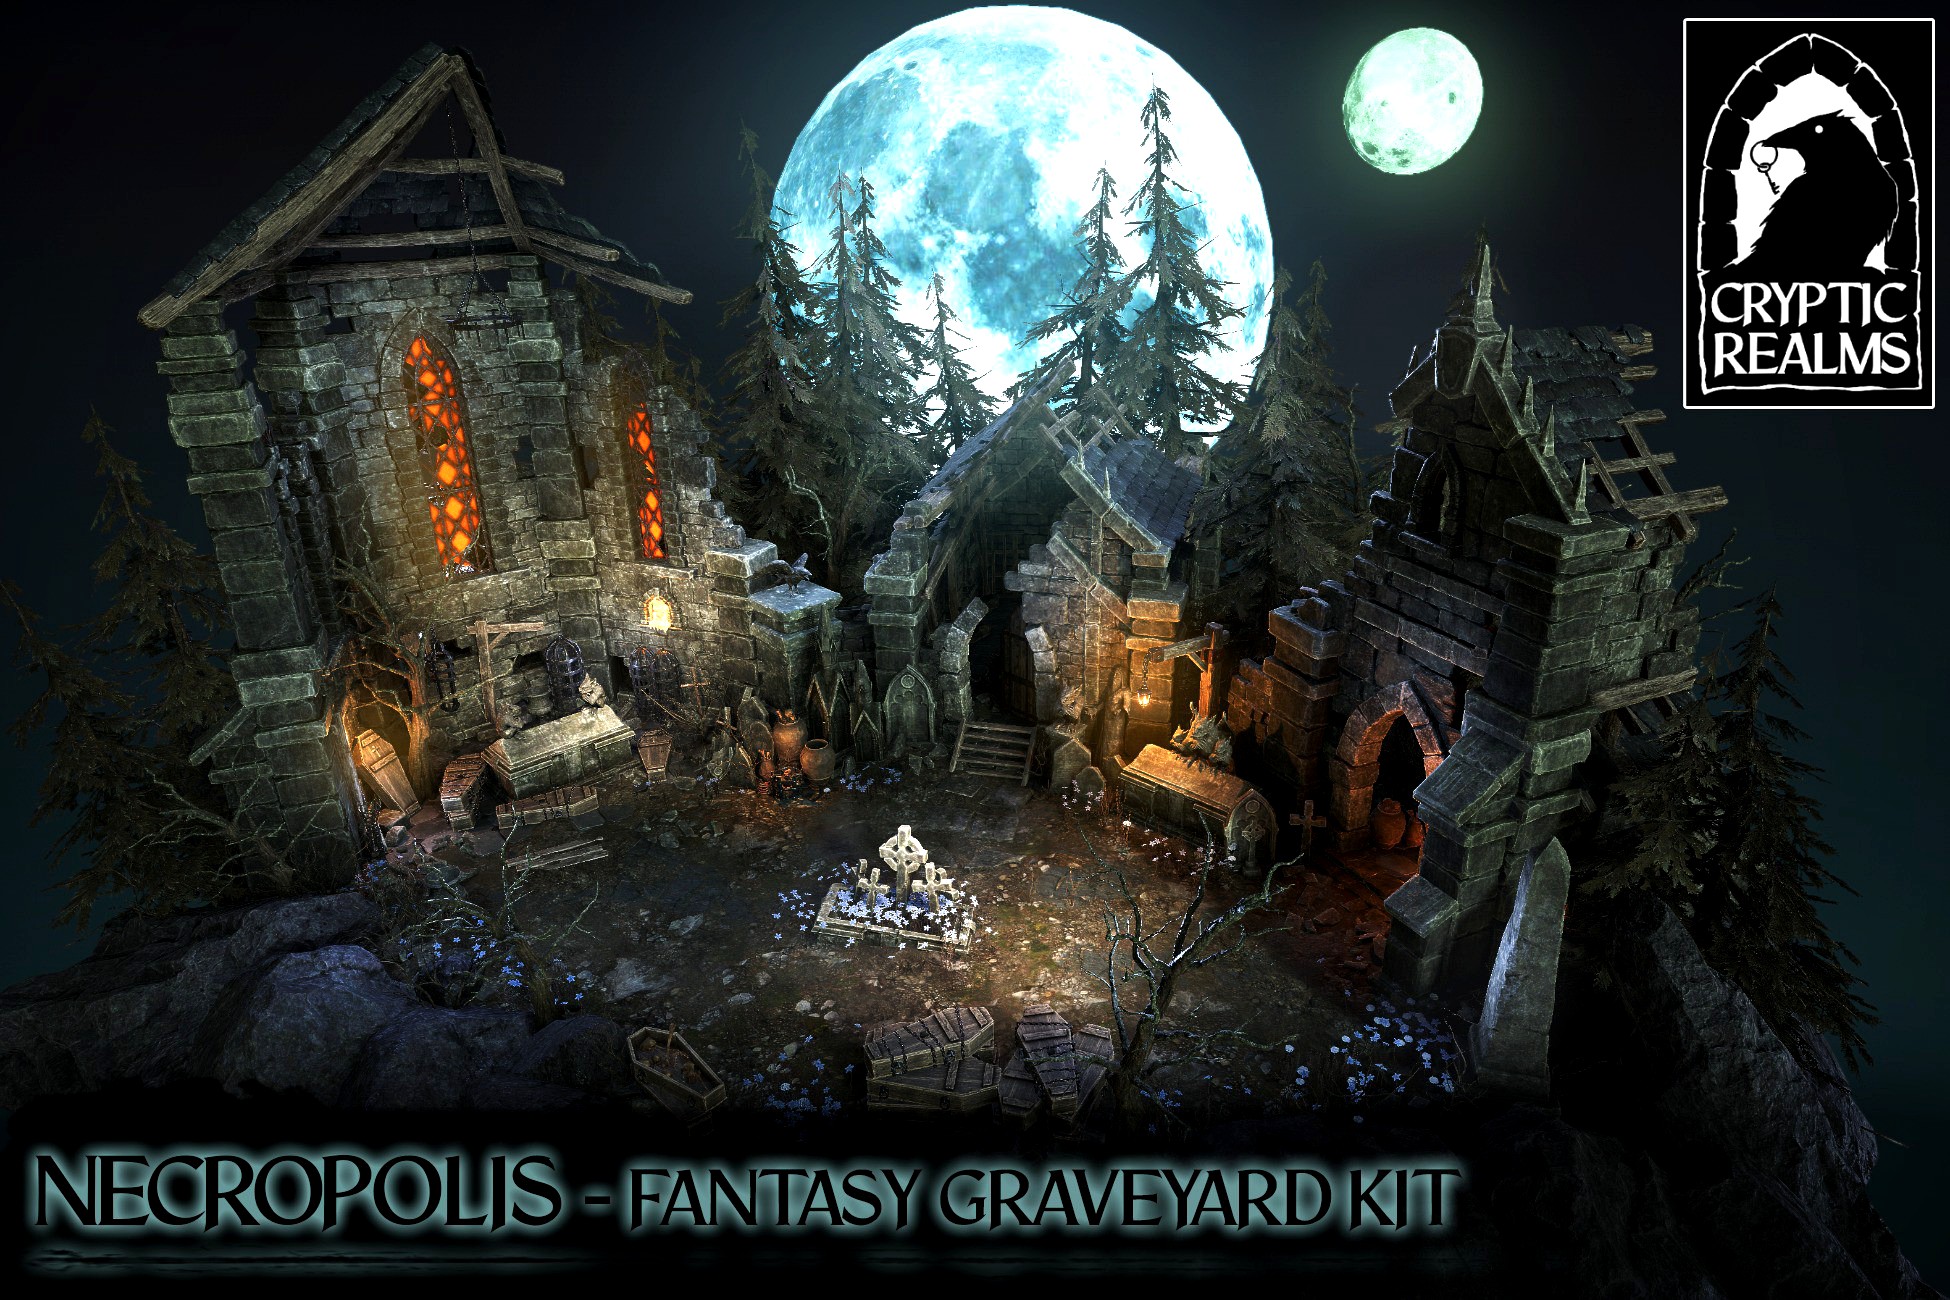 Necropolis - Fantasy Graveyard Kit